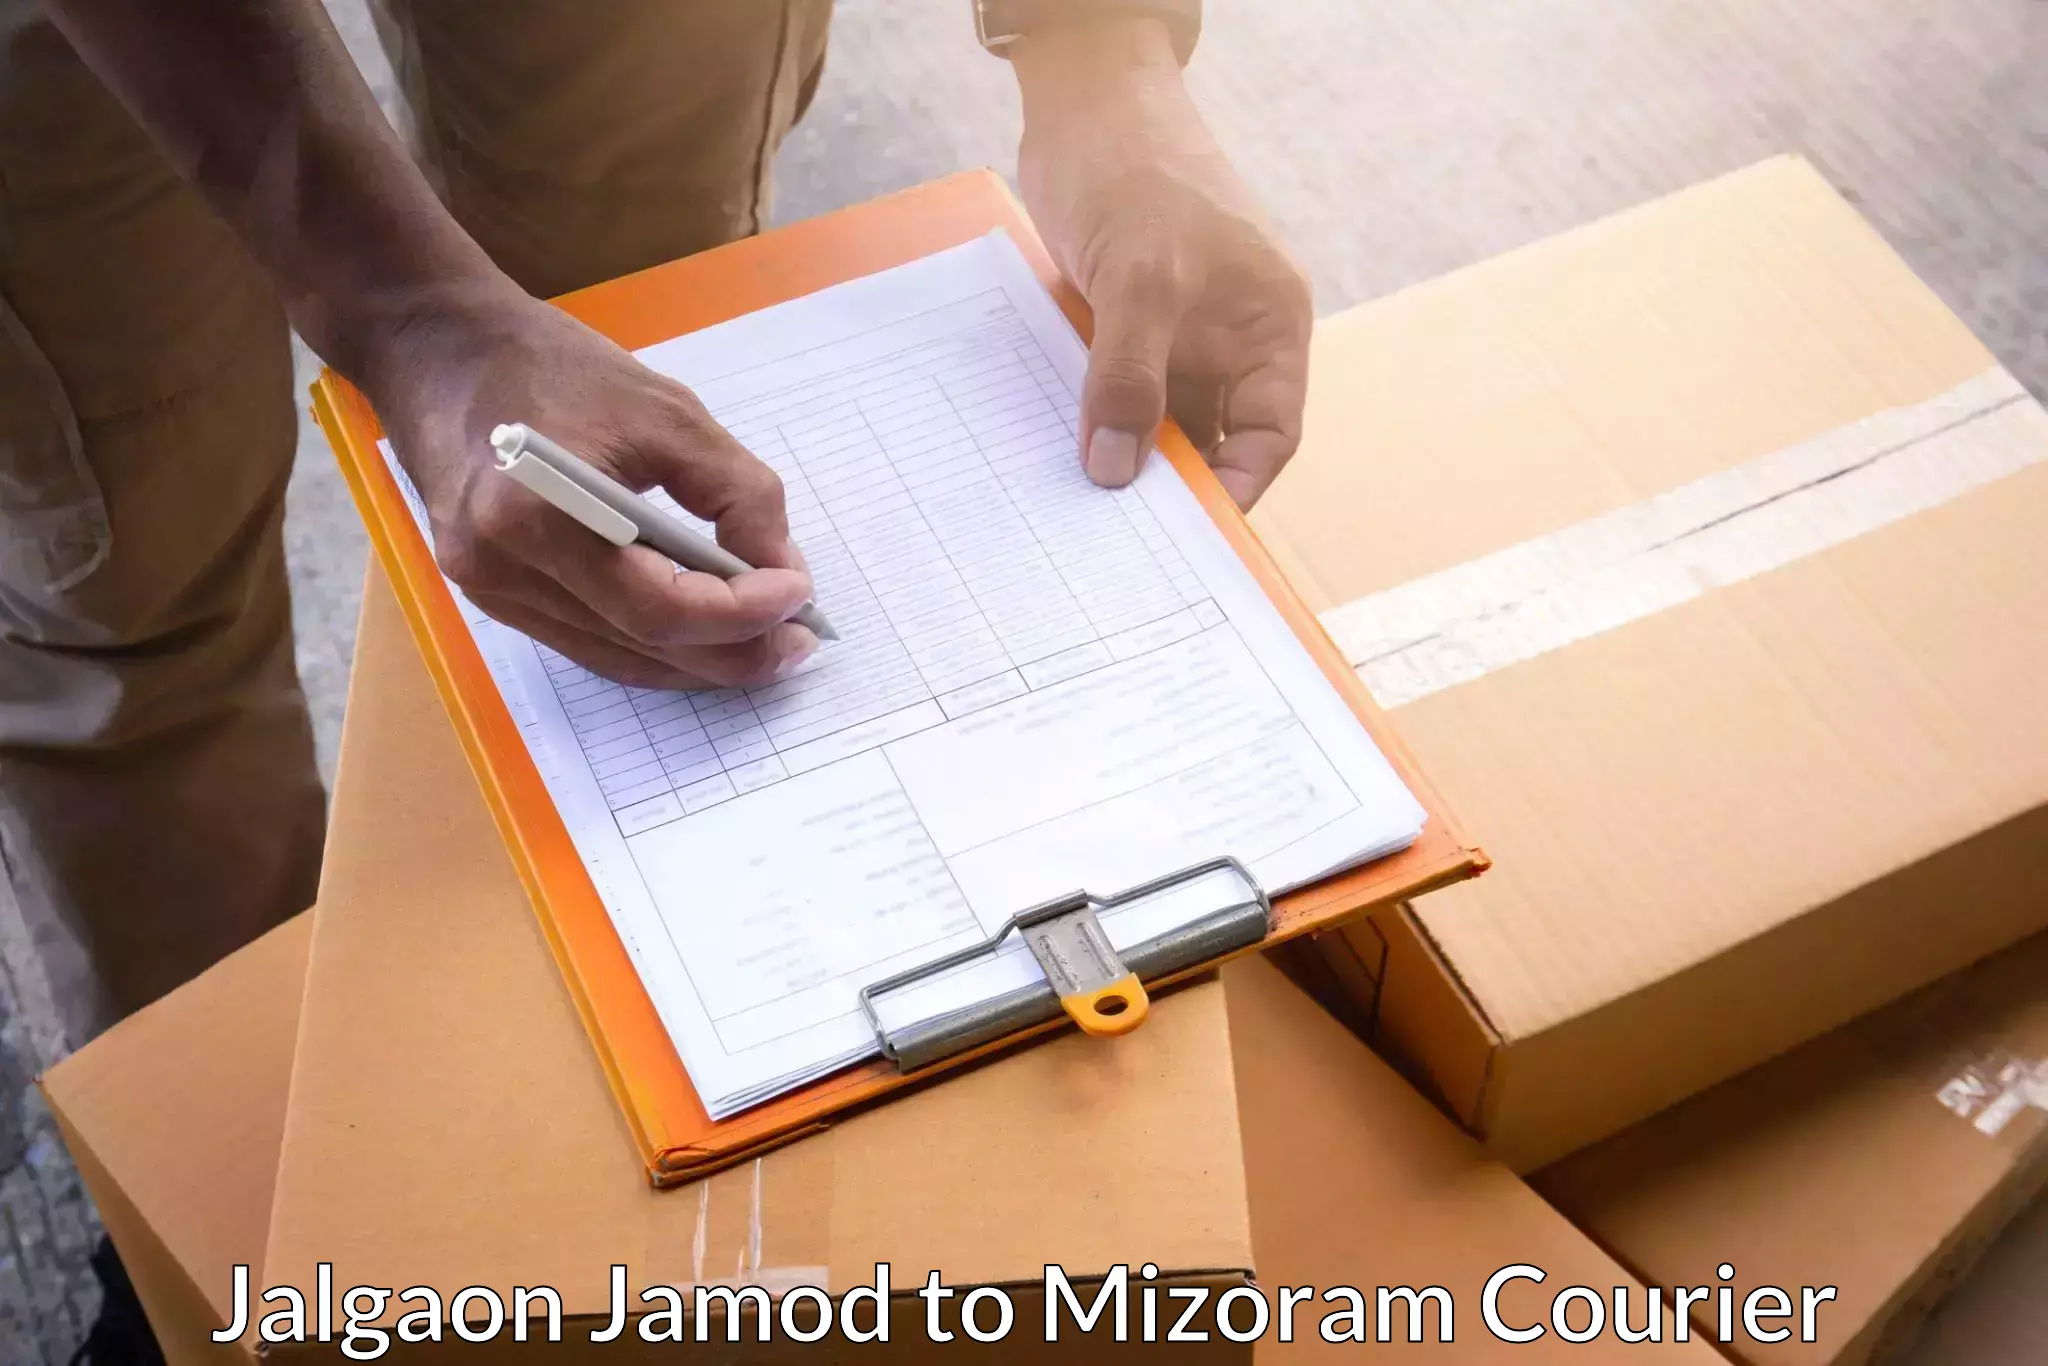 Speedy delivery service Jalgaon Jamod to Champhai